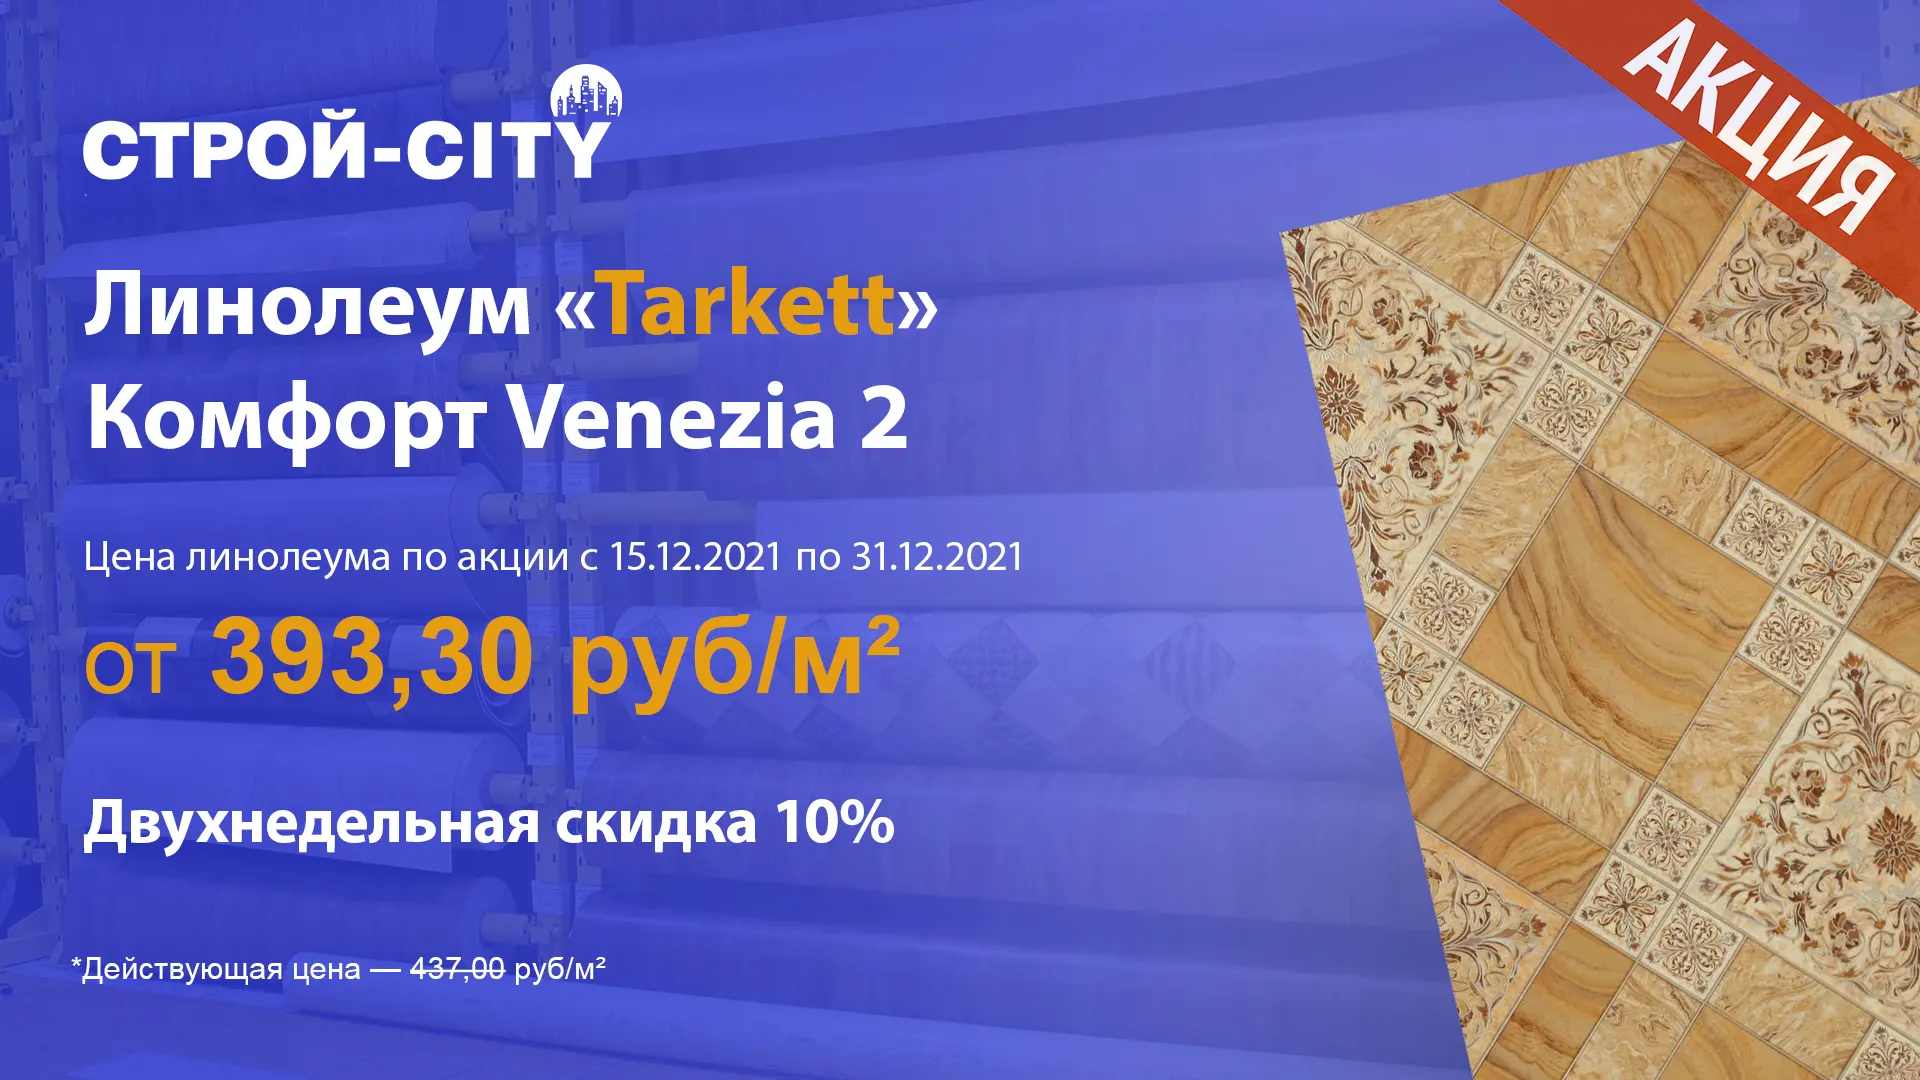 Линолеум «Tarkett» Комфорт Venezia 2 по акции со скидкой 10% с 15.12.2021 по 31.12.2021